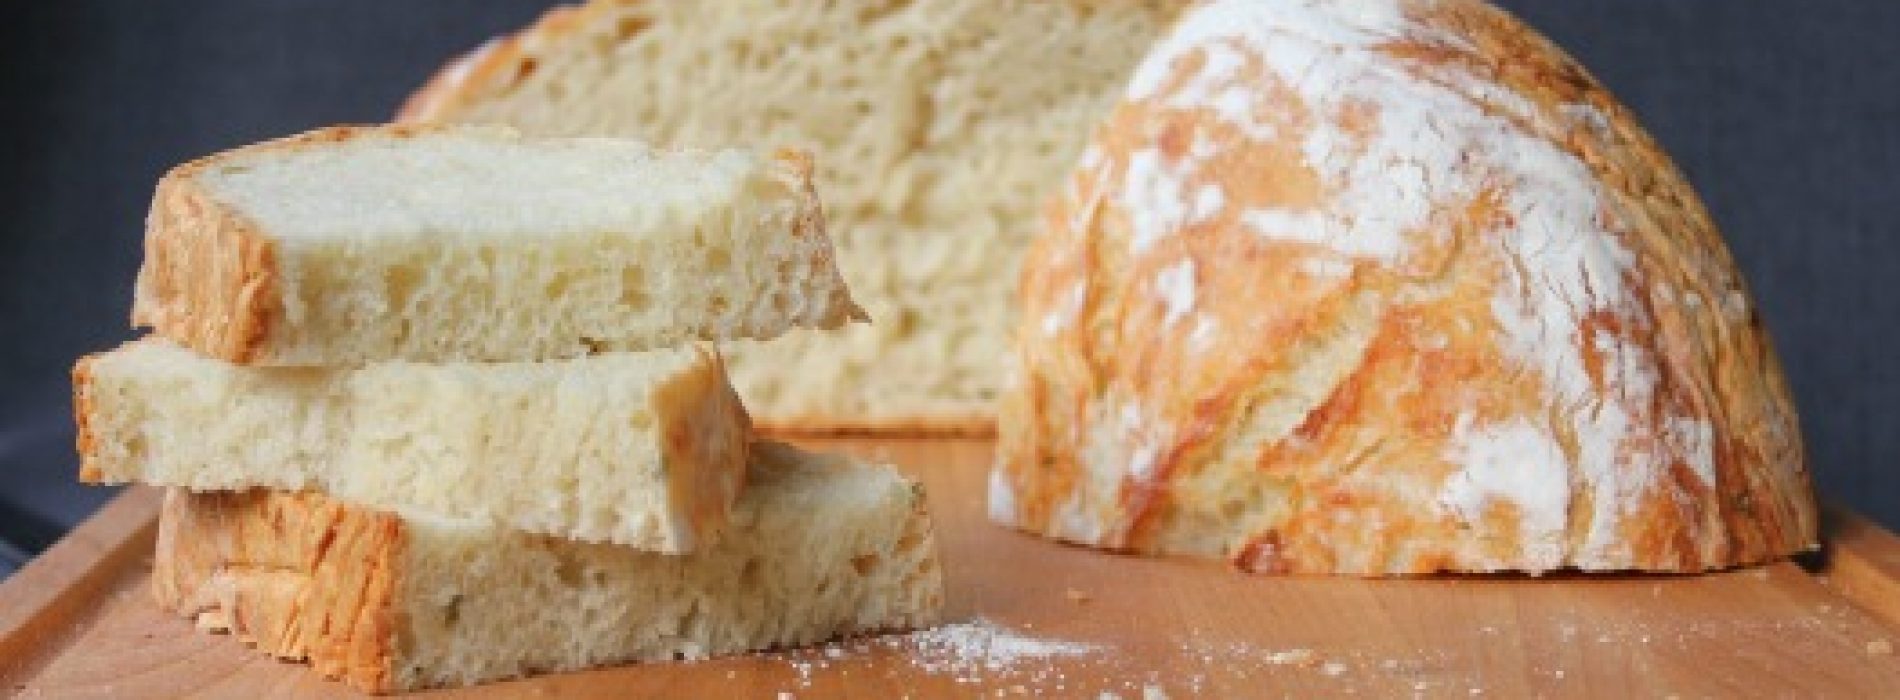 Lekker vers brood voor minder dan één euro? Lees hier hoe je dat doet!